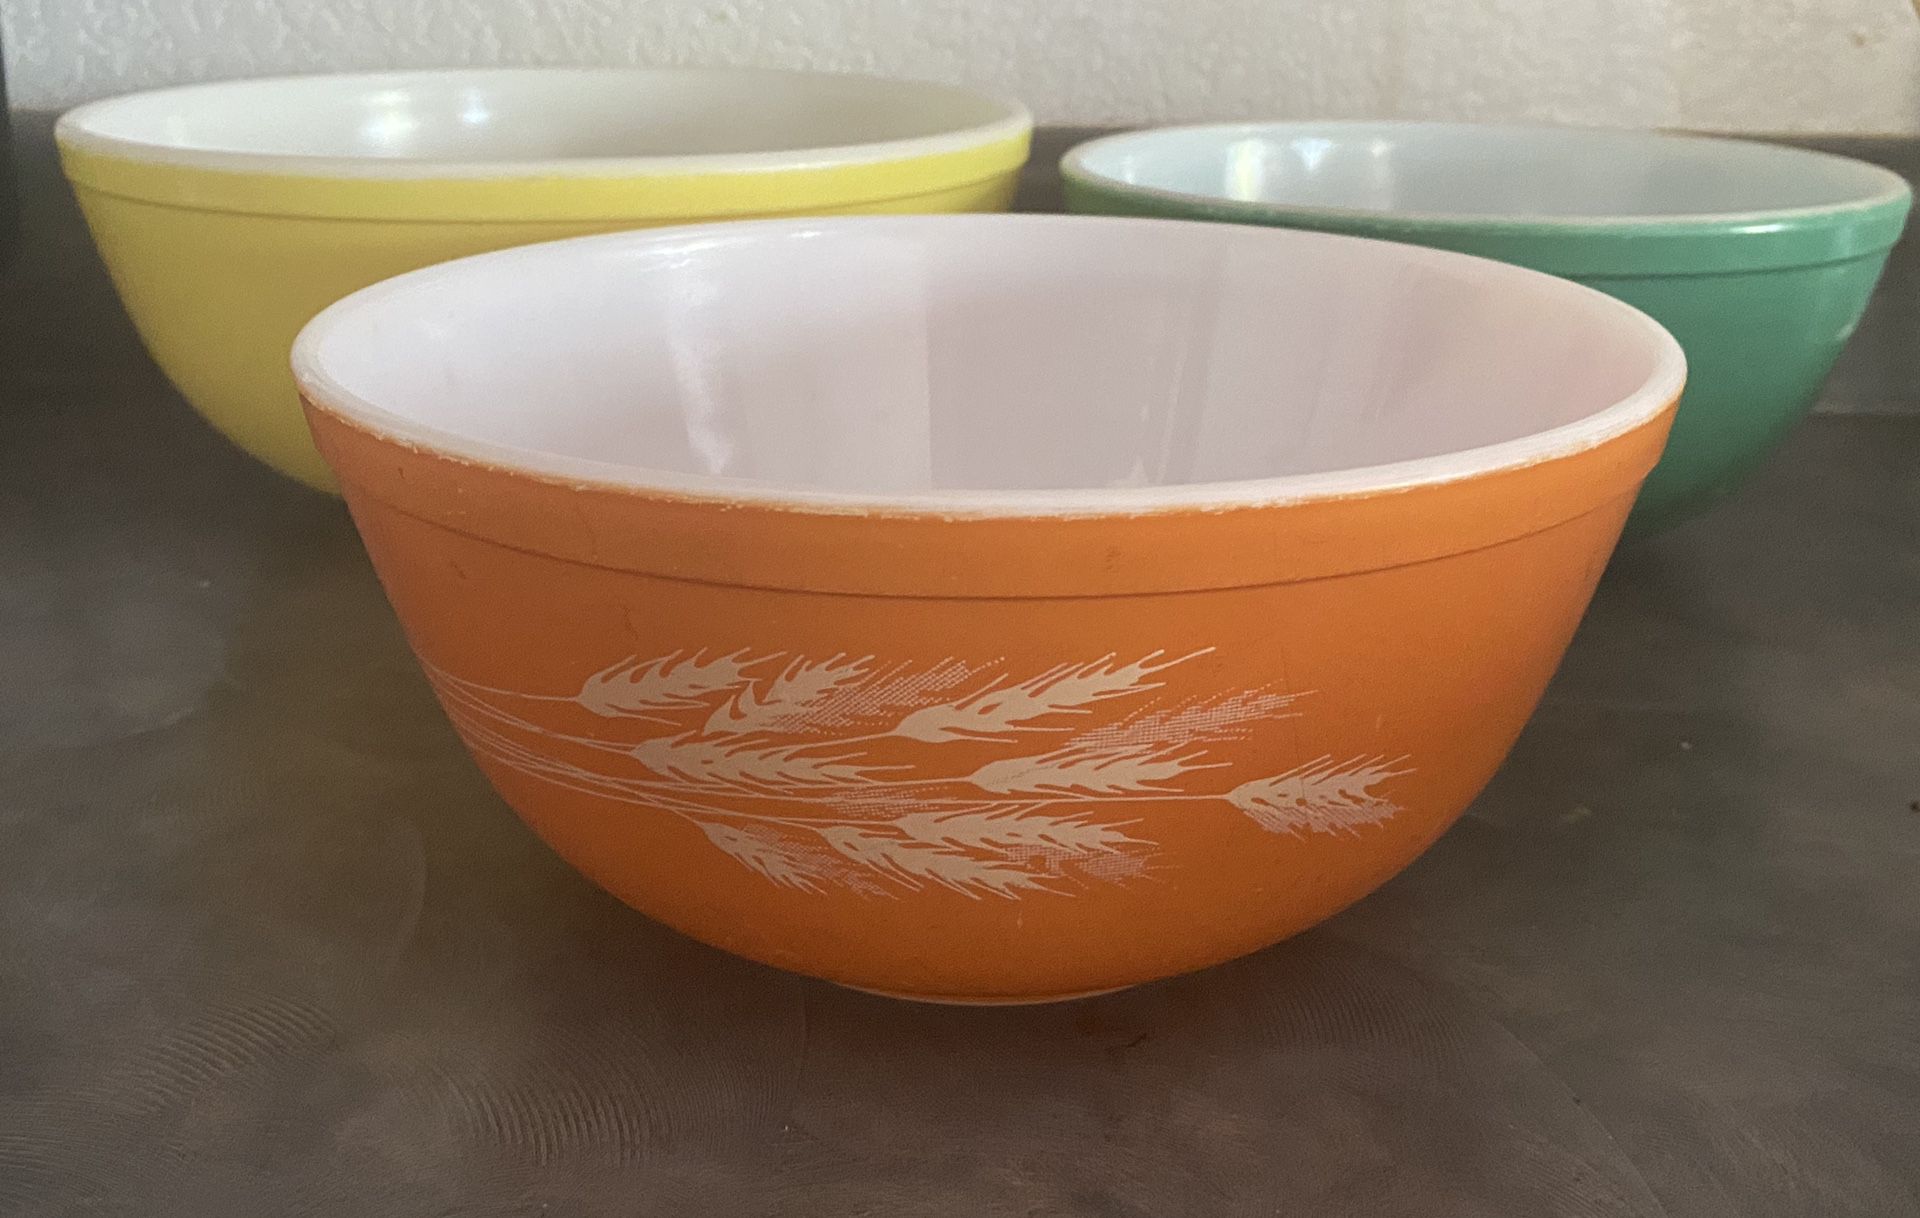 Three large Pyrex bowls